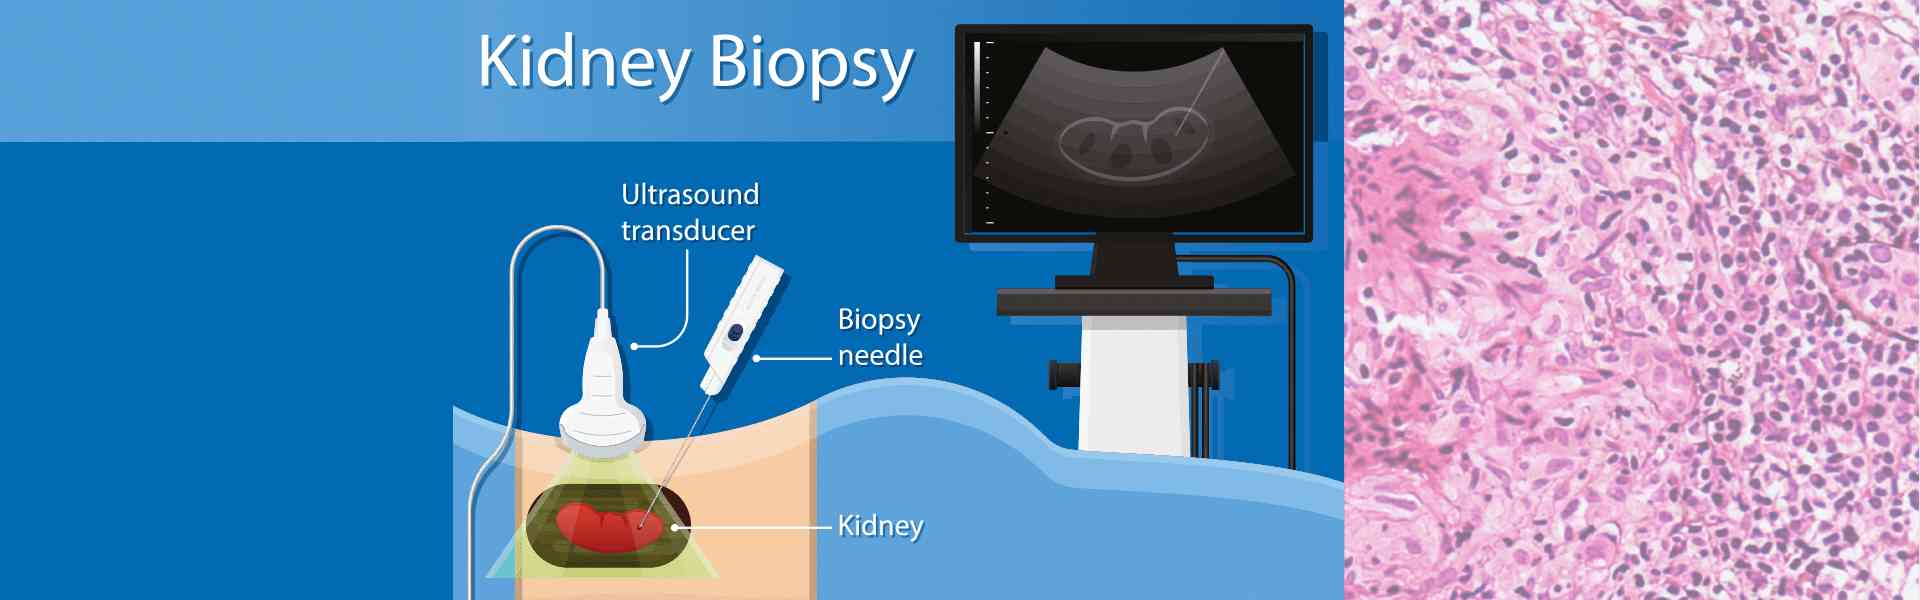 Kidney Biopsy Treatment in Bangalore, Yeshwanthpur